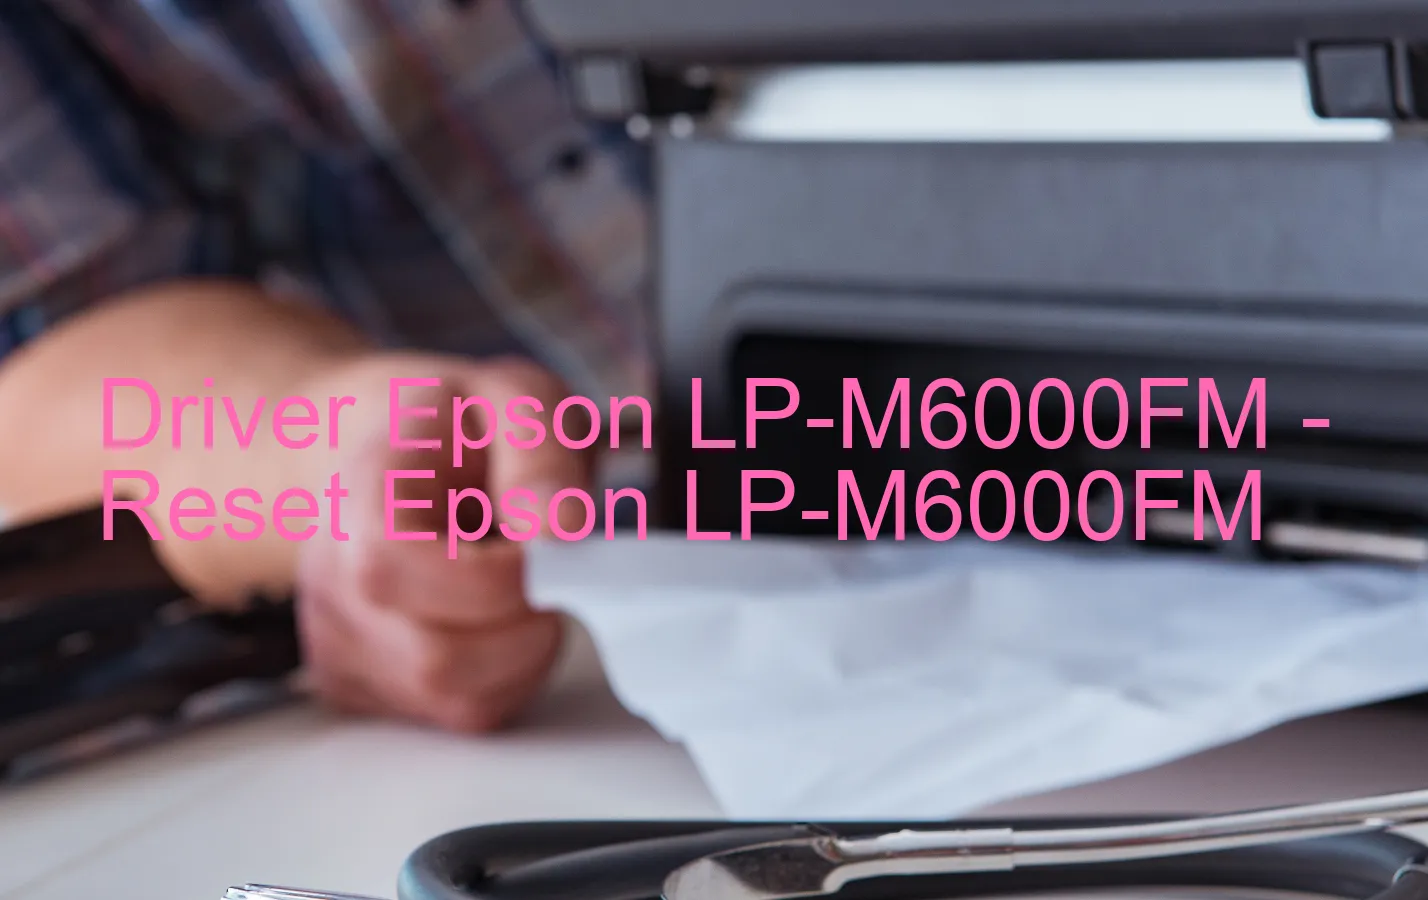 Epson LP-M6000FMのドライバー、Epson LP-M6000FMのリセットソフトウェア